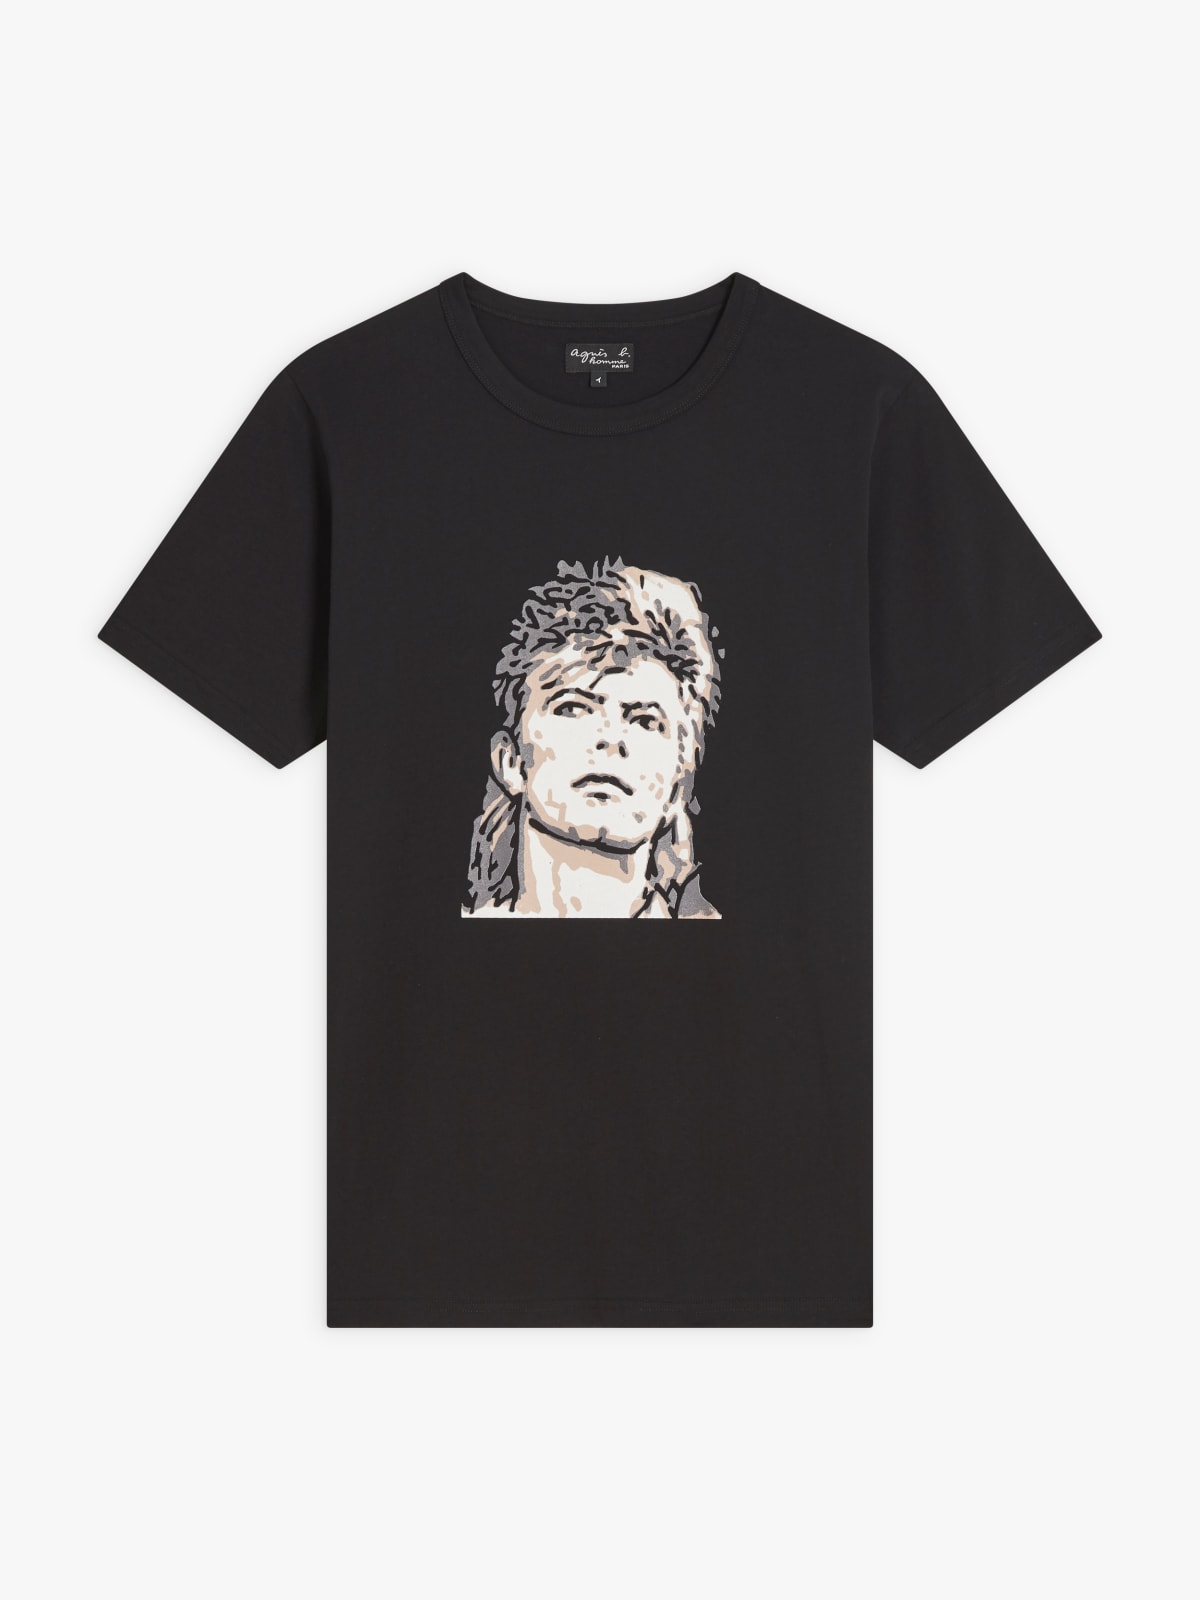 black cotton Brando t-shirt with artist Rafael Gray